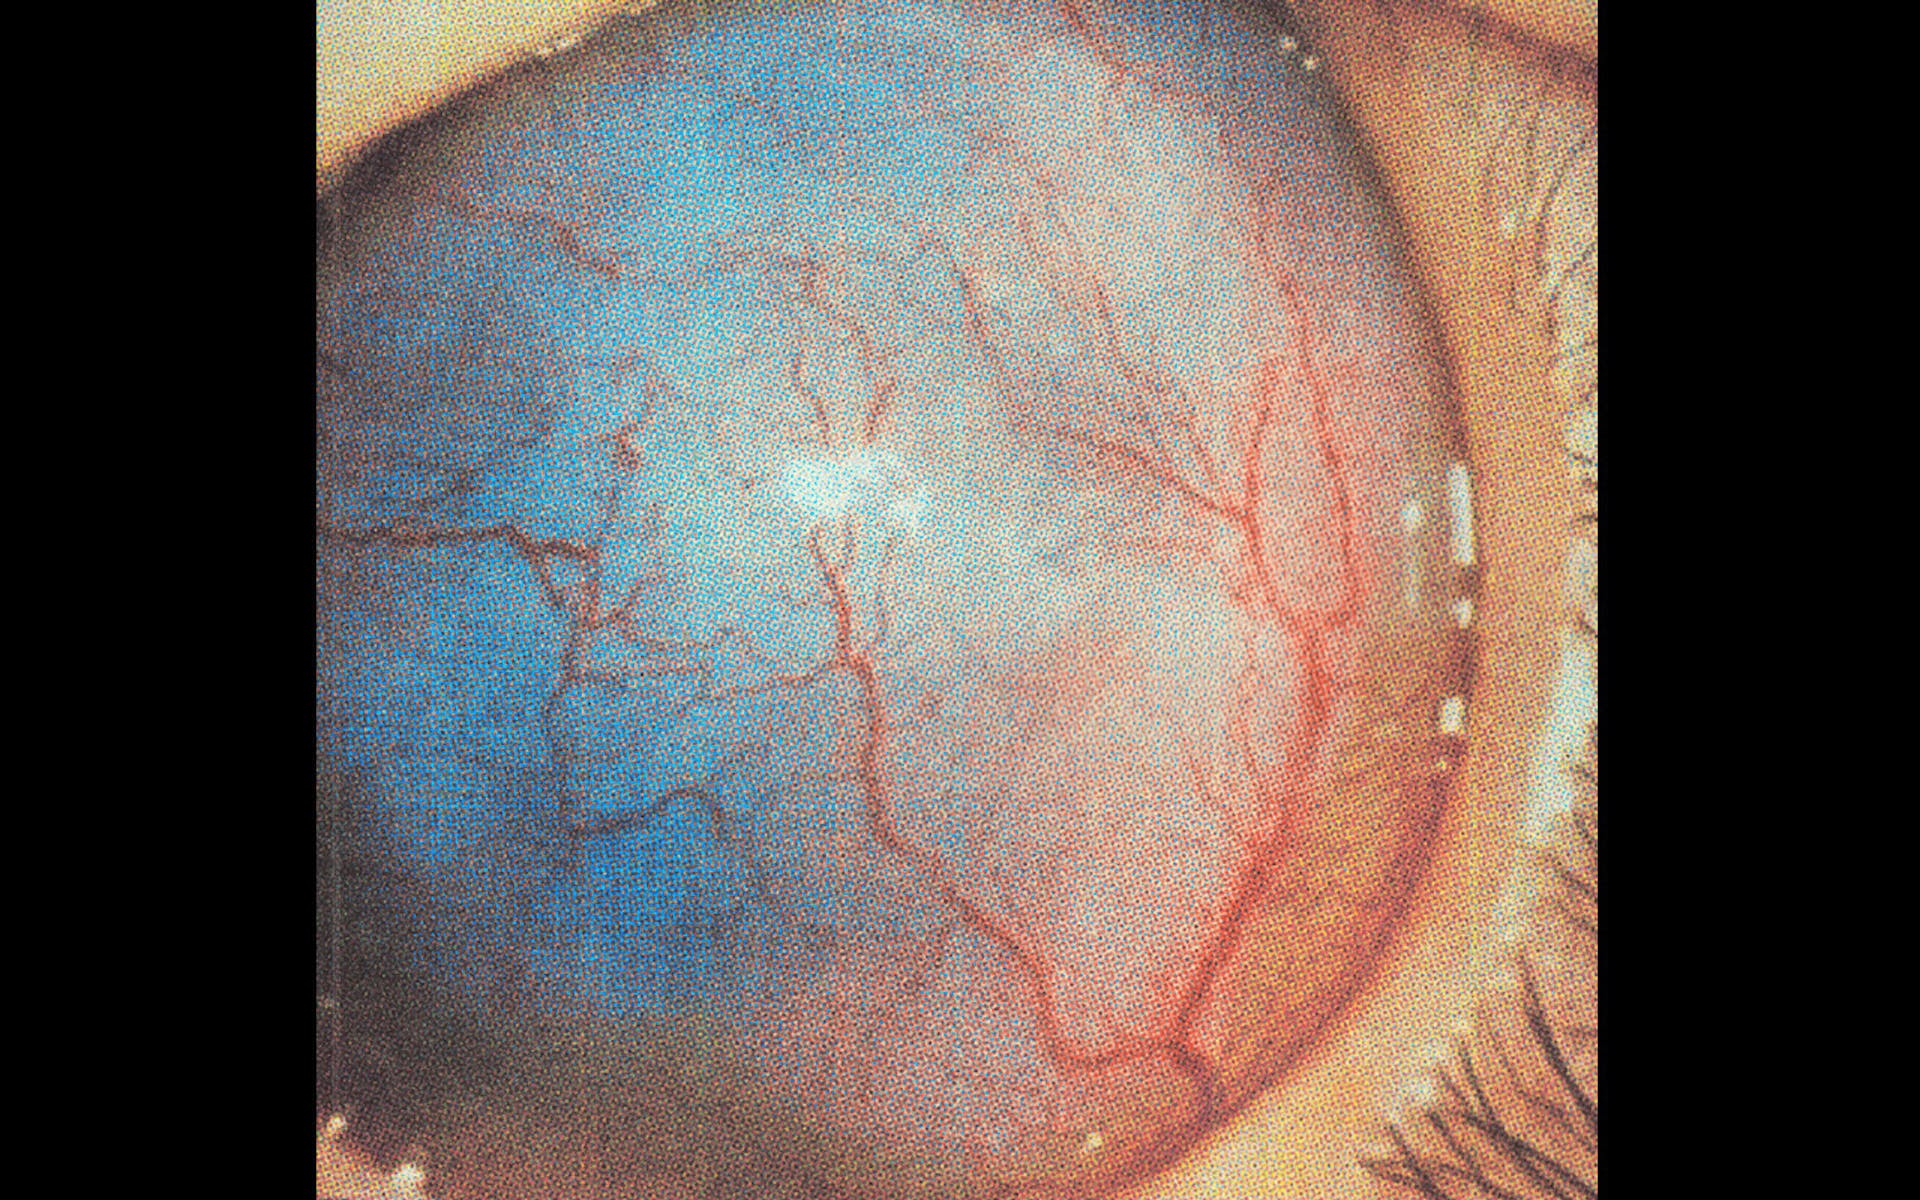 Image of eyeball with no cornea, iris, or pupil